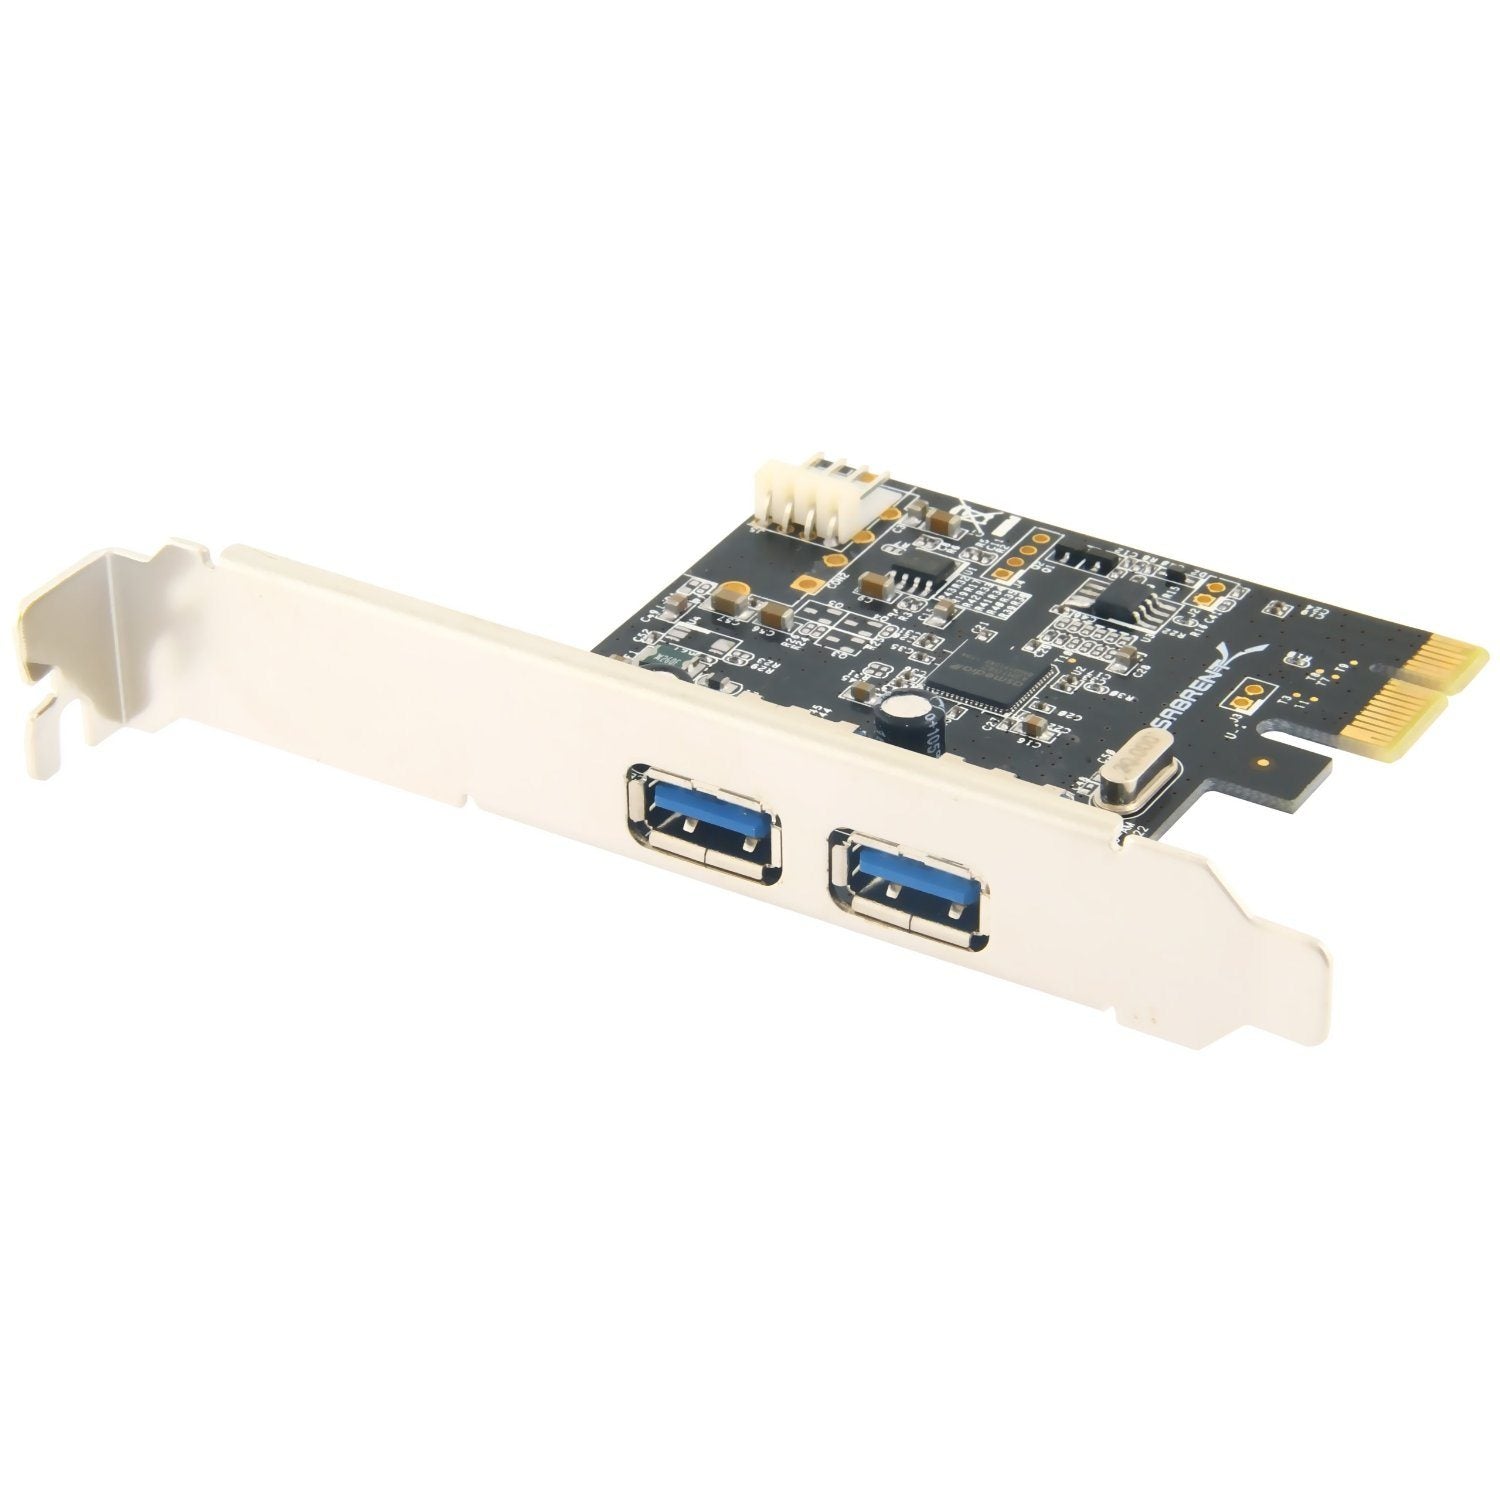 USB 3.0 2-port Desktop PCI Express Card D Transfer Rates Up To 5Gbps (PCIX-USB3)